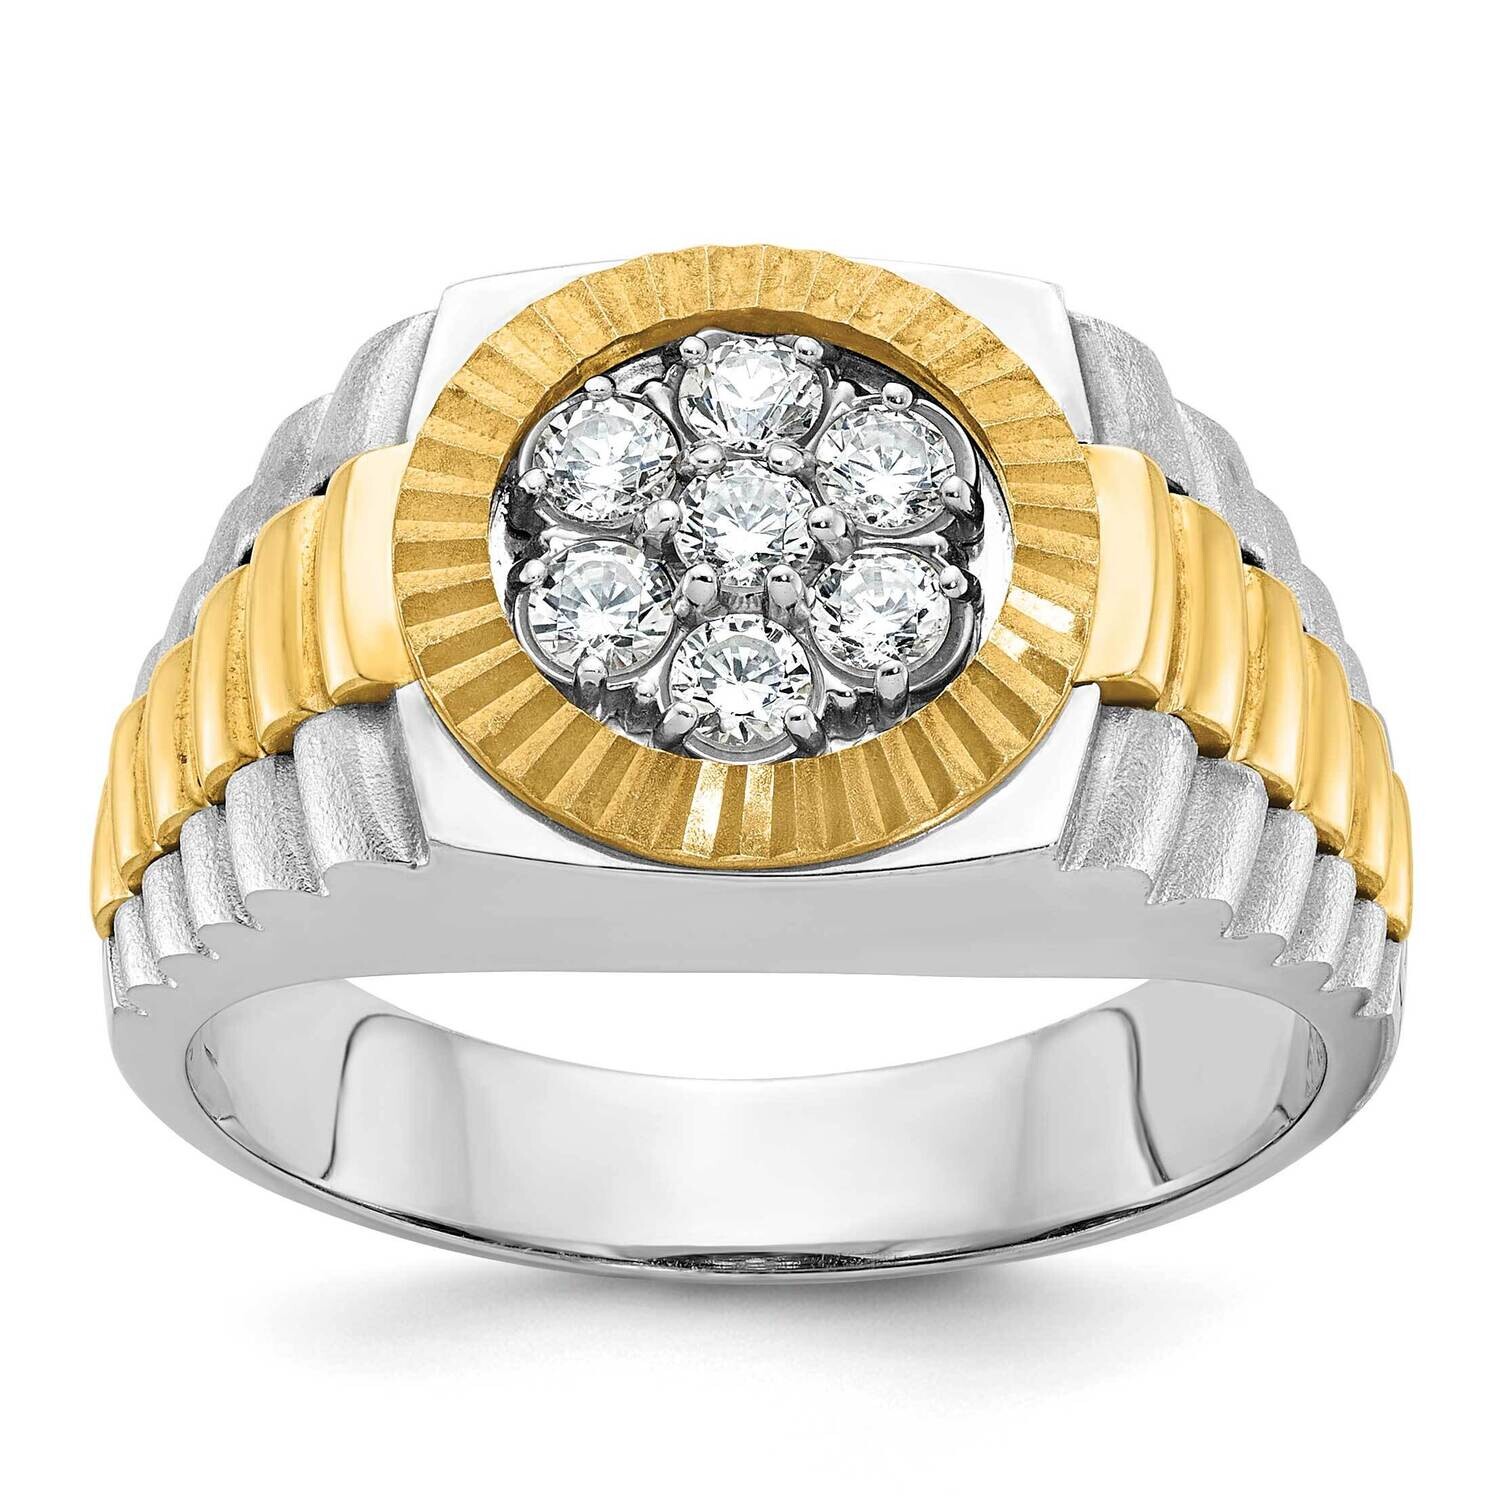 Ibgoodman Men's Polished Satin Textured 1/2 Carat Aa Quality Diamond Cluster Ring 14k Two-Tone Gold B56512-4WYAA